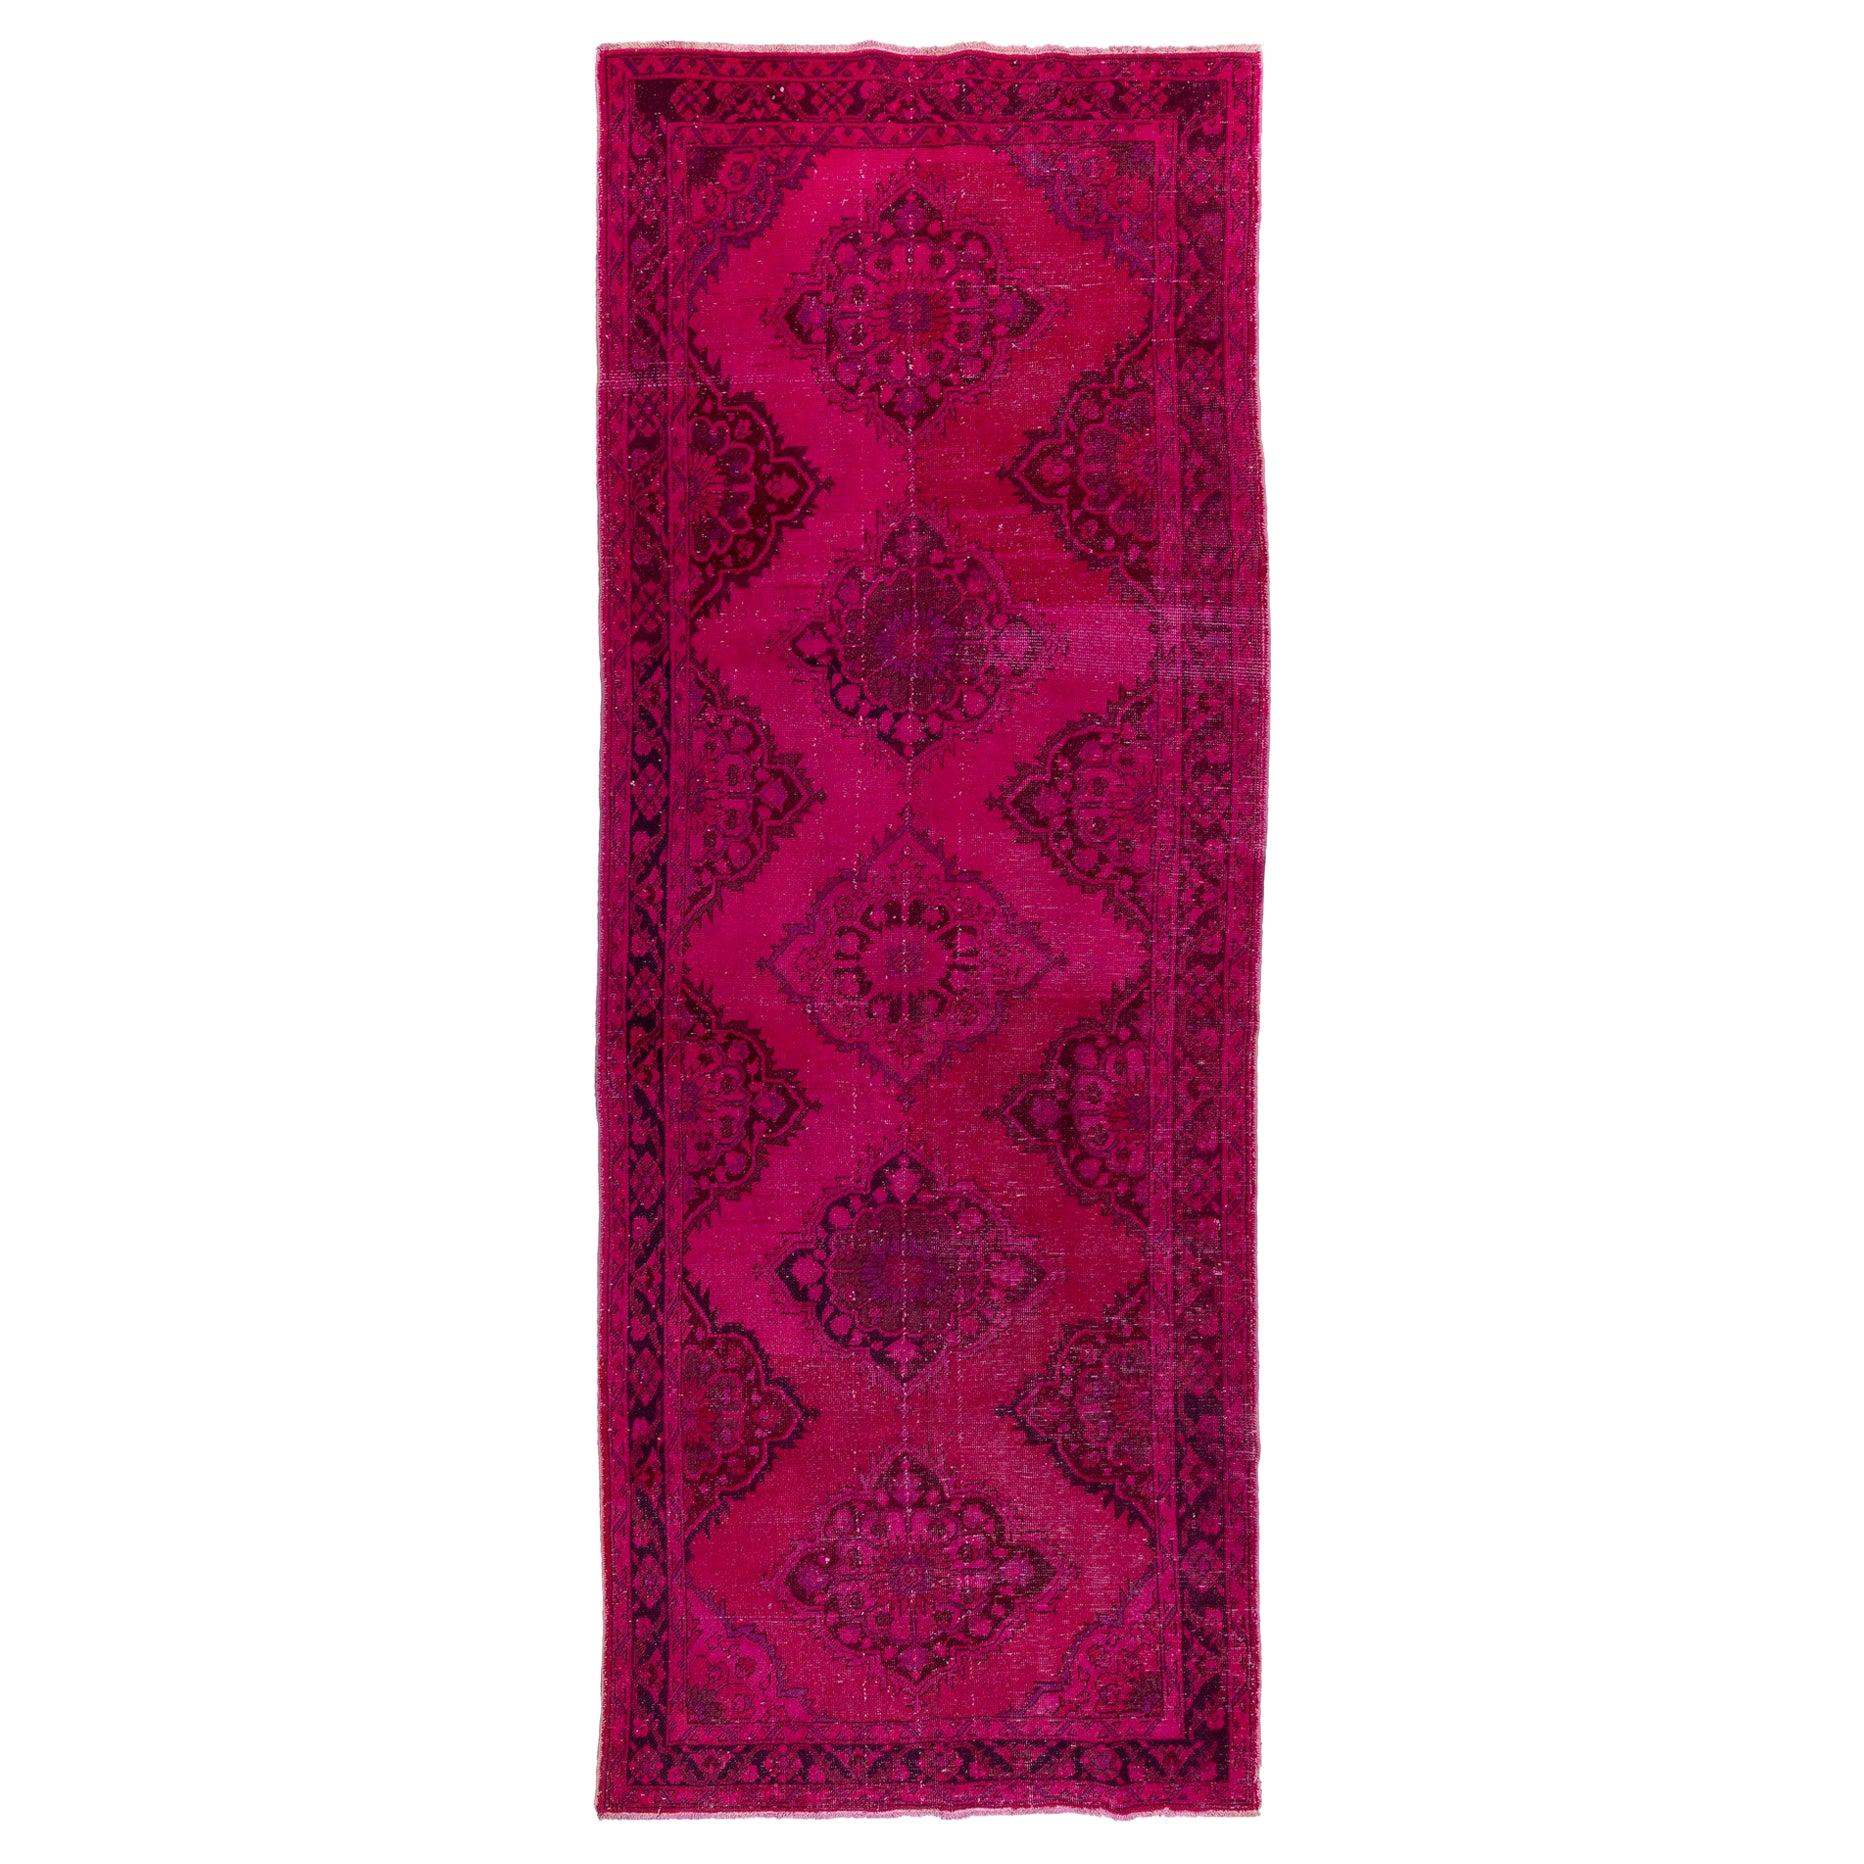 4.8x12.3 Ft Vintage Handmade Konya, Sille Runner Rug Over-Dyed in Fuchsia Pink